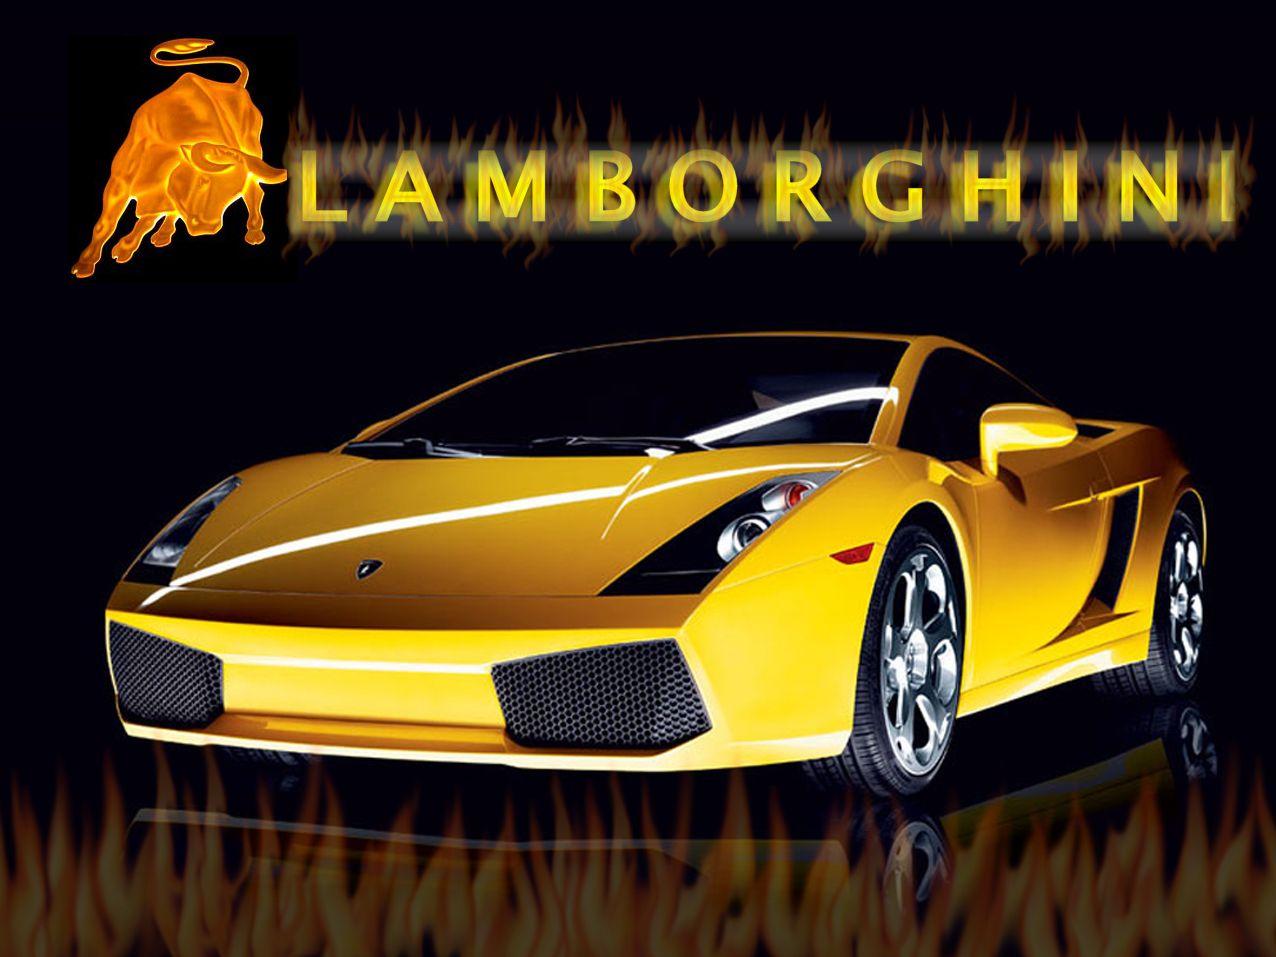 Wallpaper Of Lamborghini